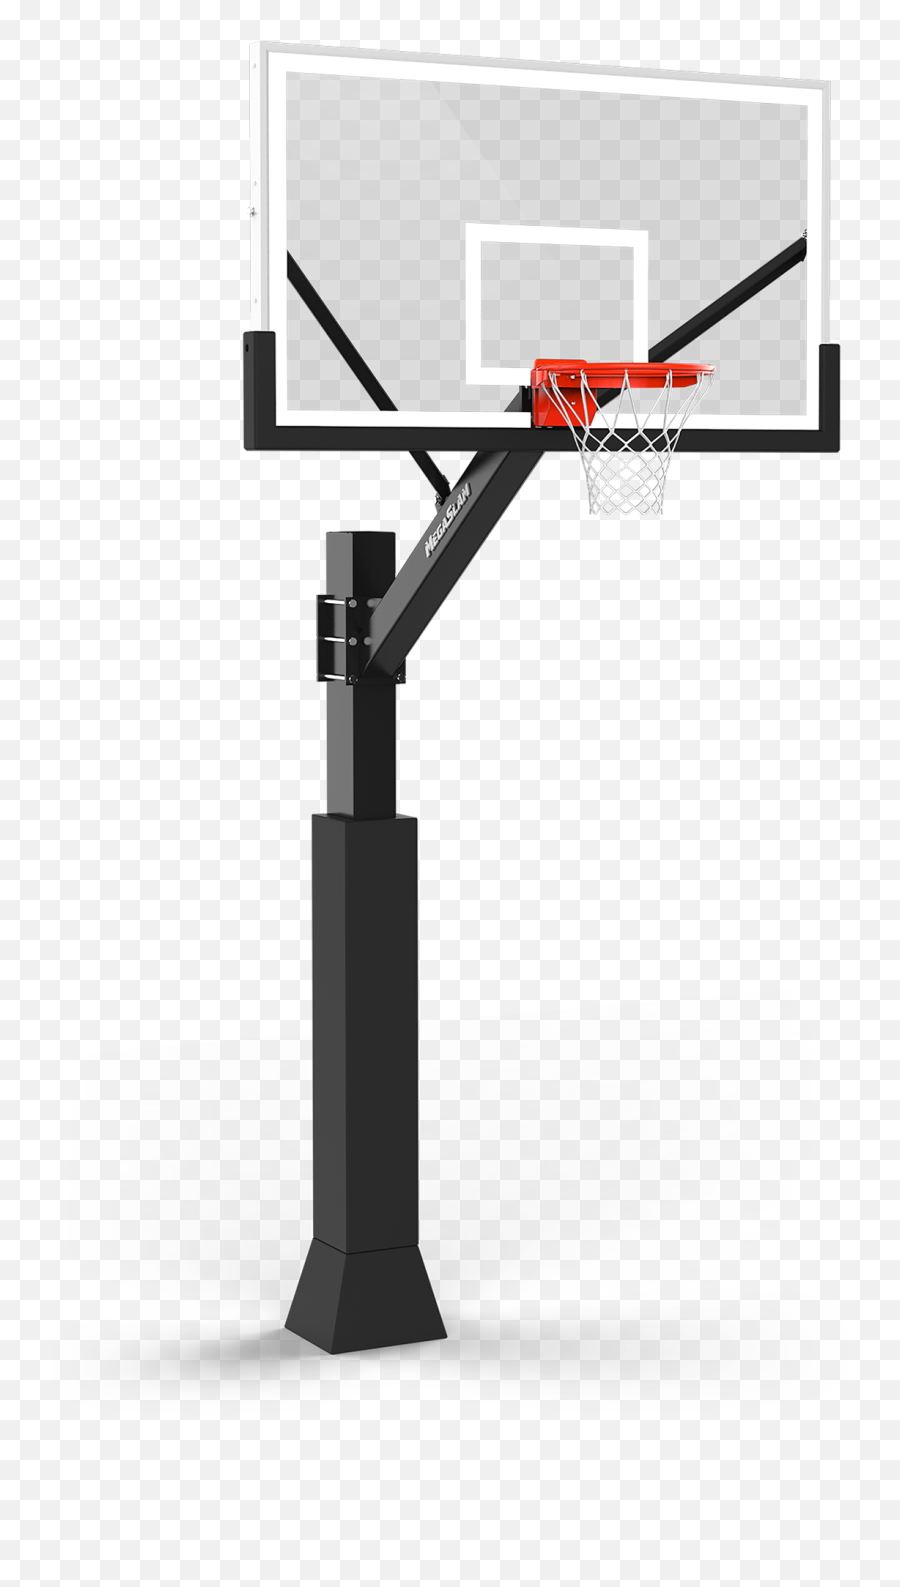 Megaslam Fx 72 Inch Basketball Hoop - Megaslam Fx Pro Png,Basketball Rim Png